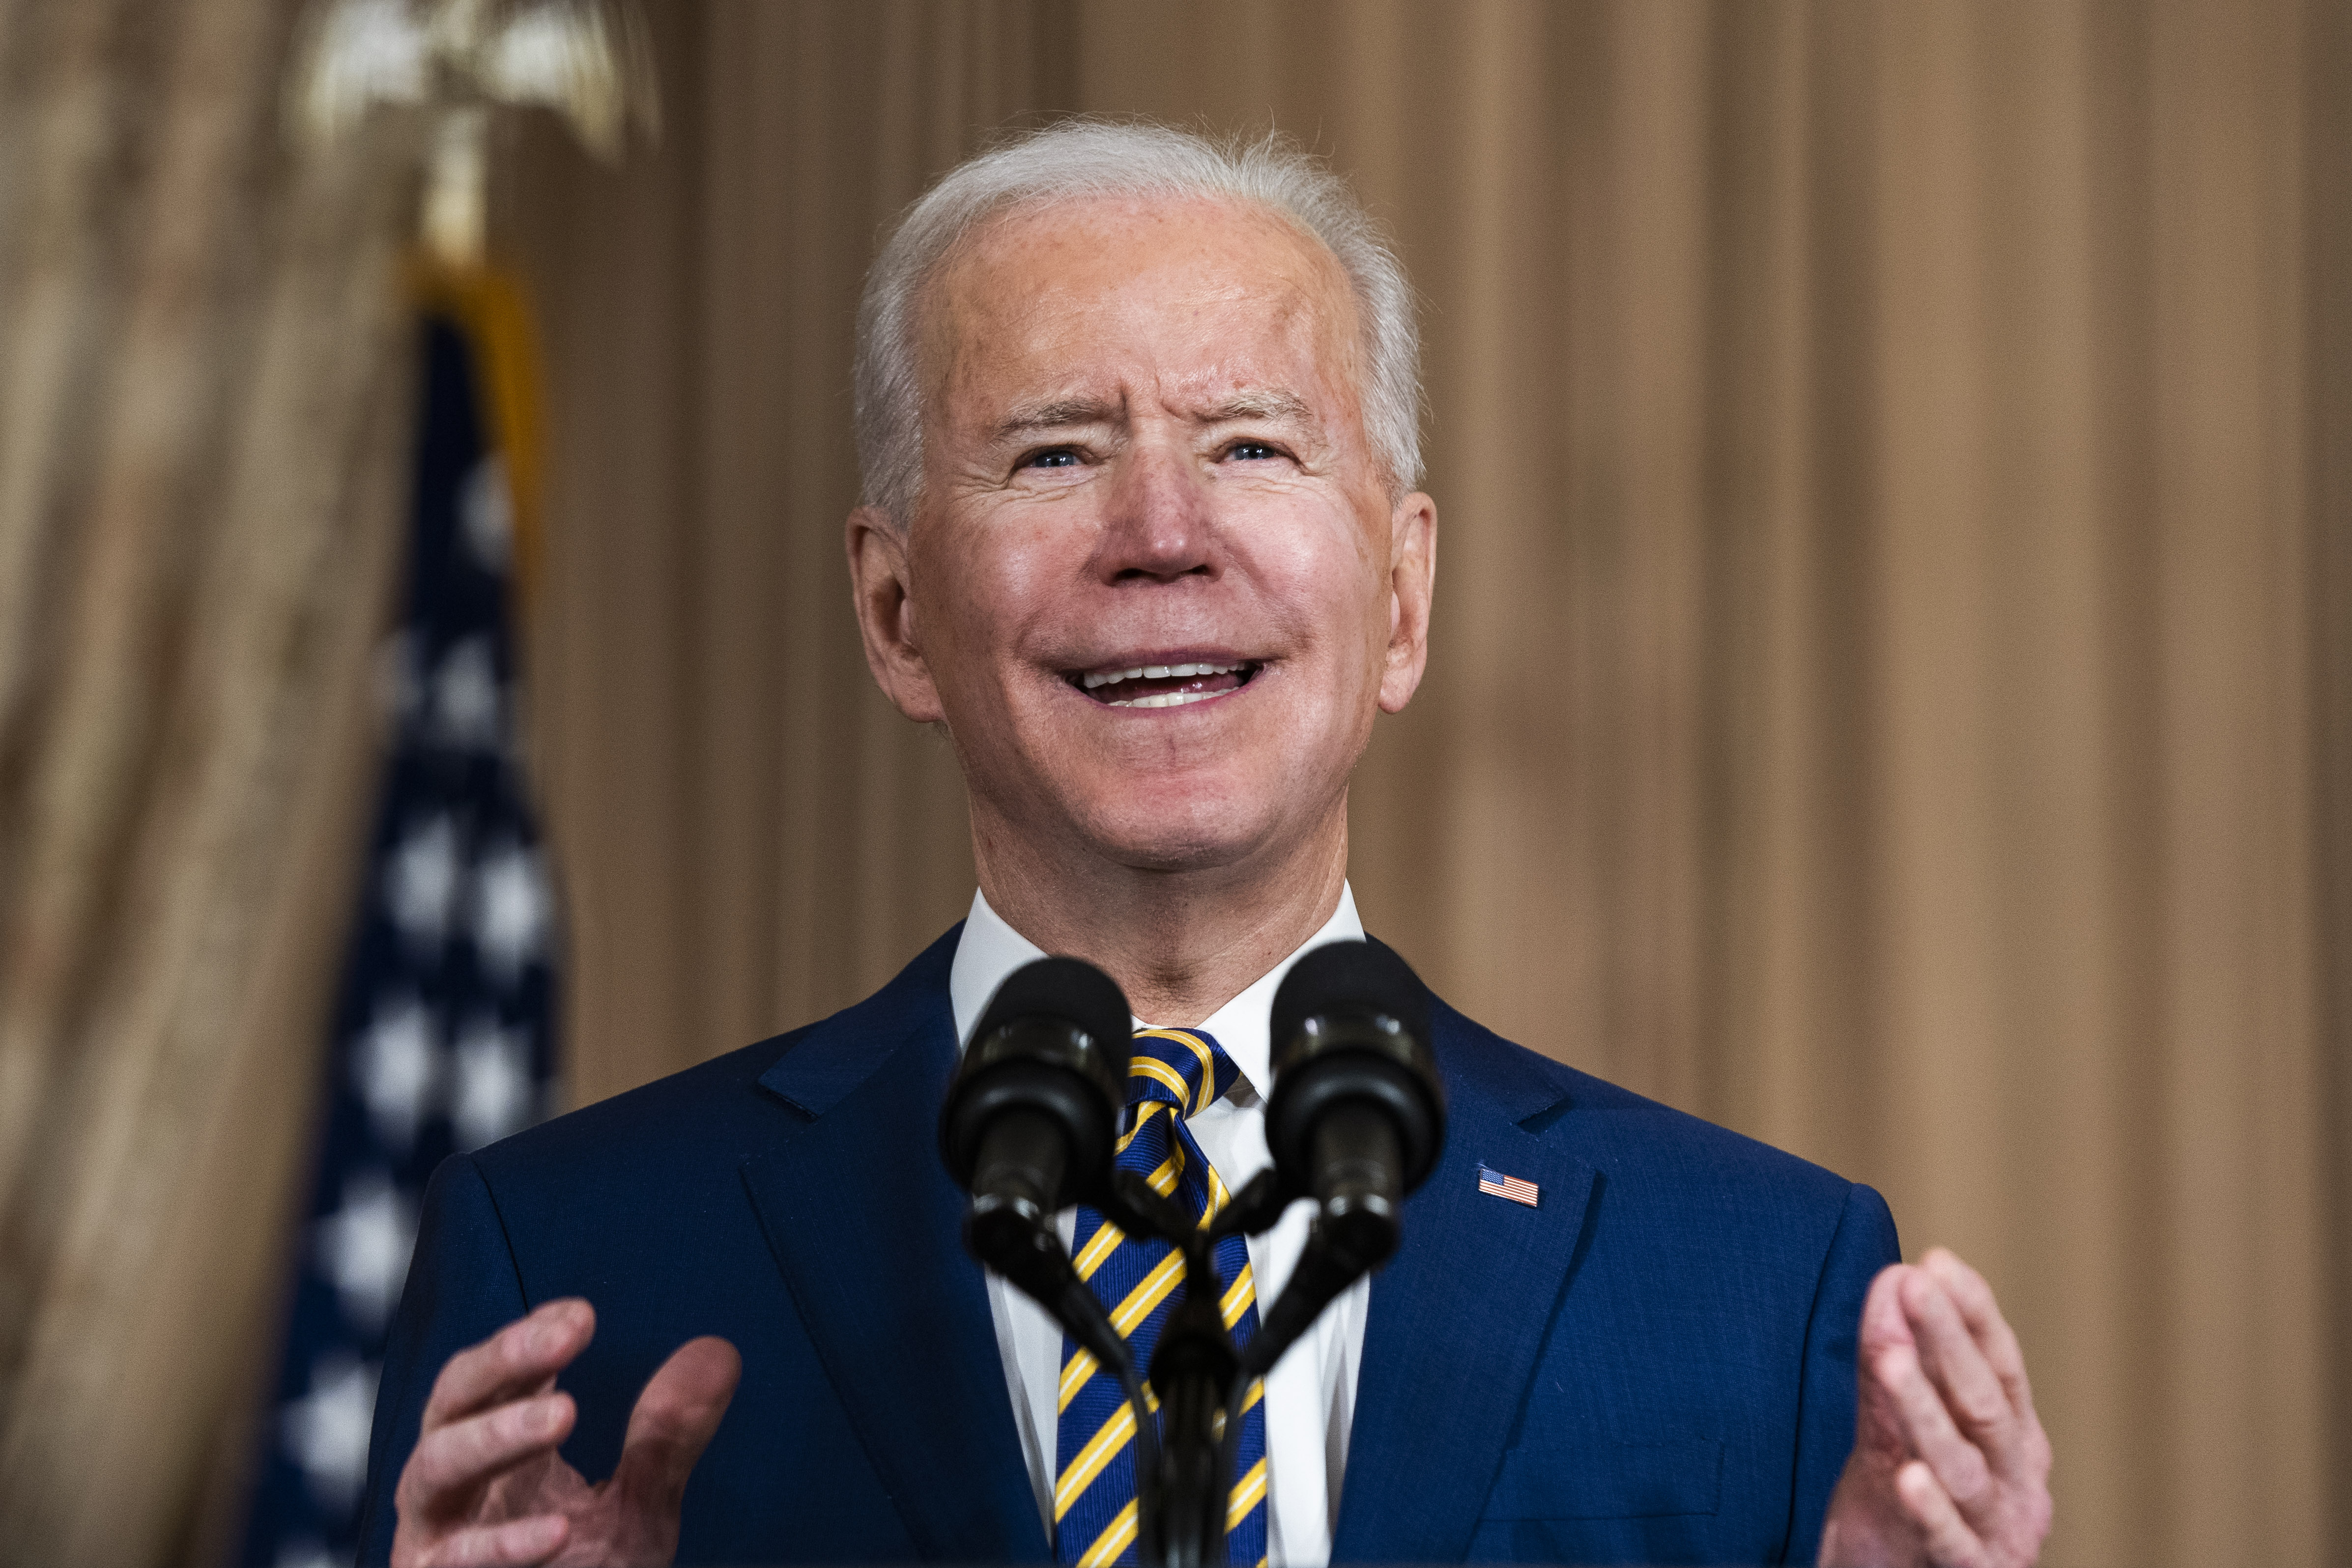 U.S. President Joe Biden speaks at the State Department in Washington, D.C., on Feb. 4, 2021. (Jim Lo Scalzo—EPA/Getty Images)